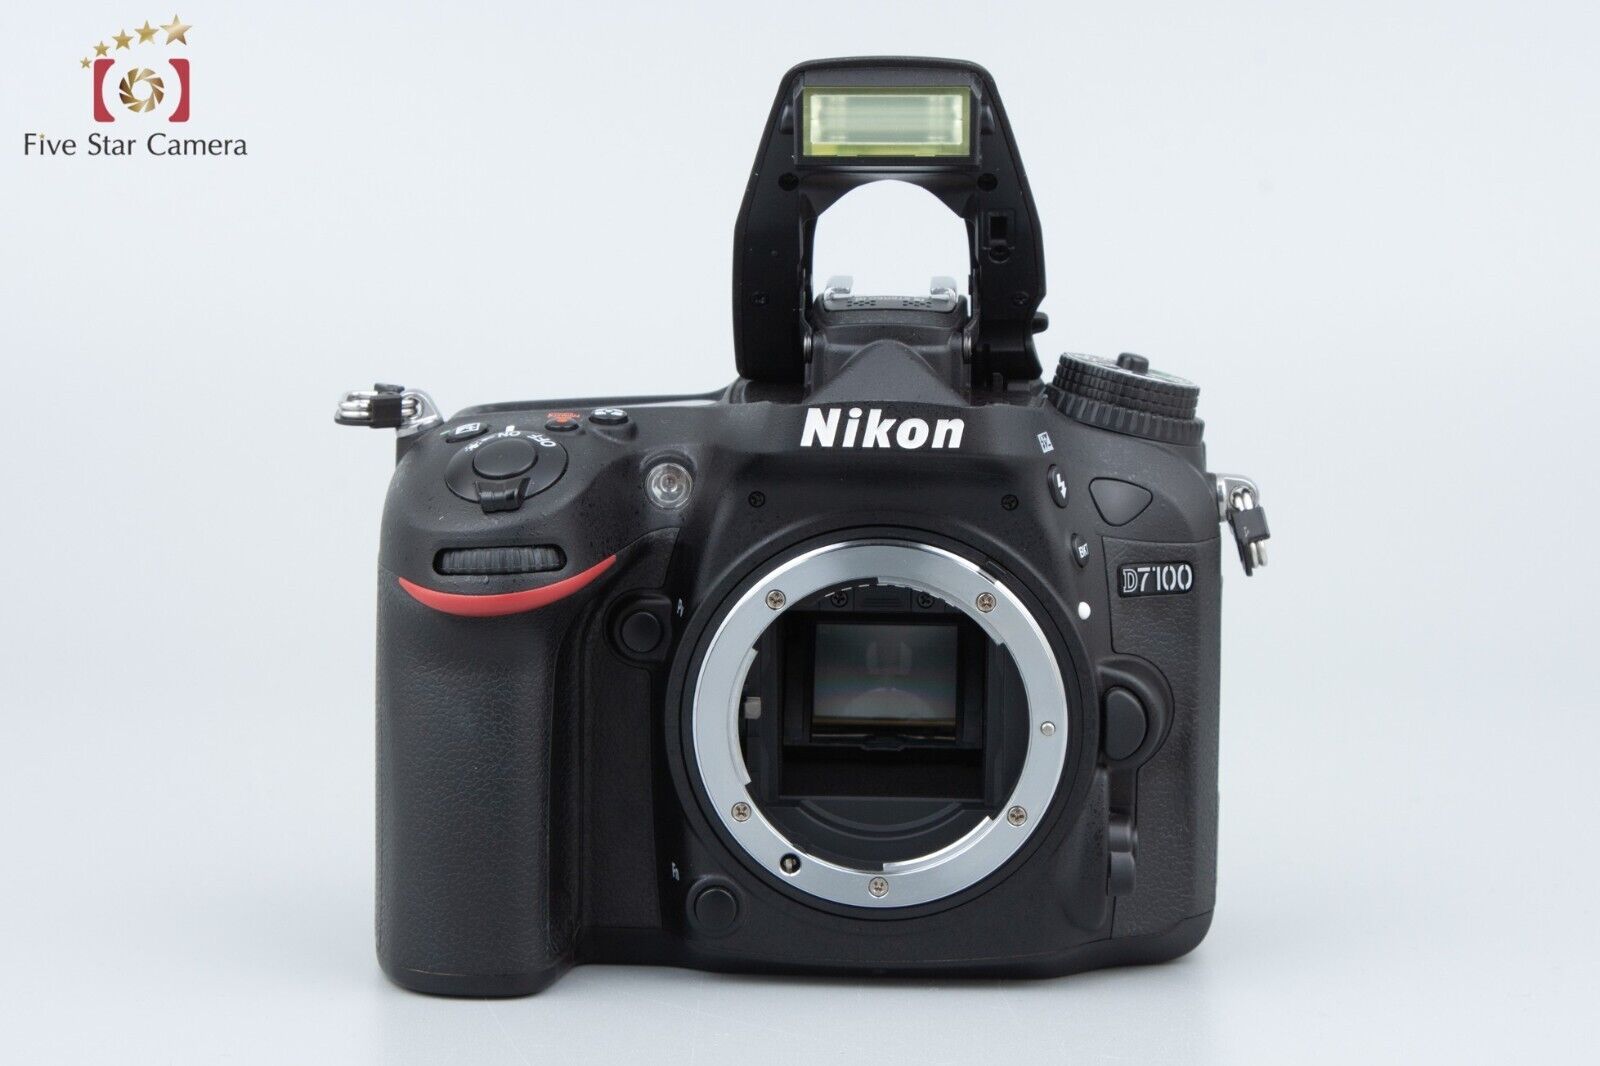 "Shutter count 4,844" Nikon D7100 24.1 MP Digital SLR Camera Body